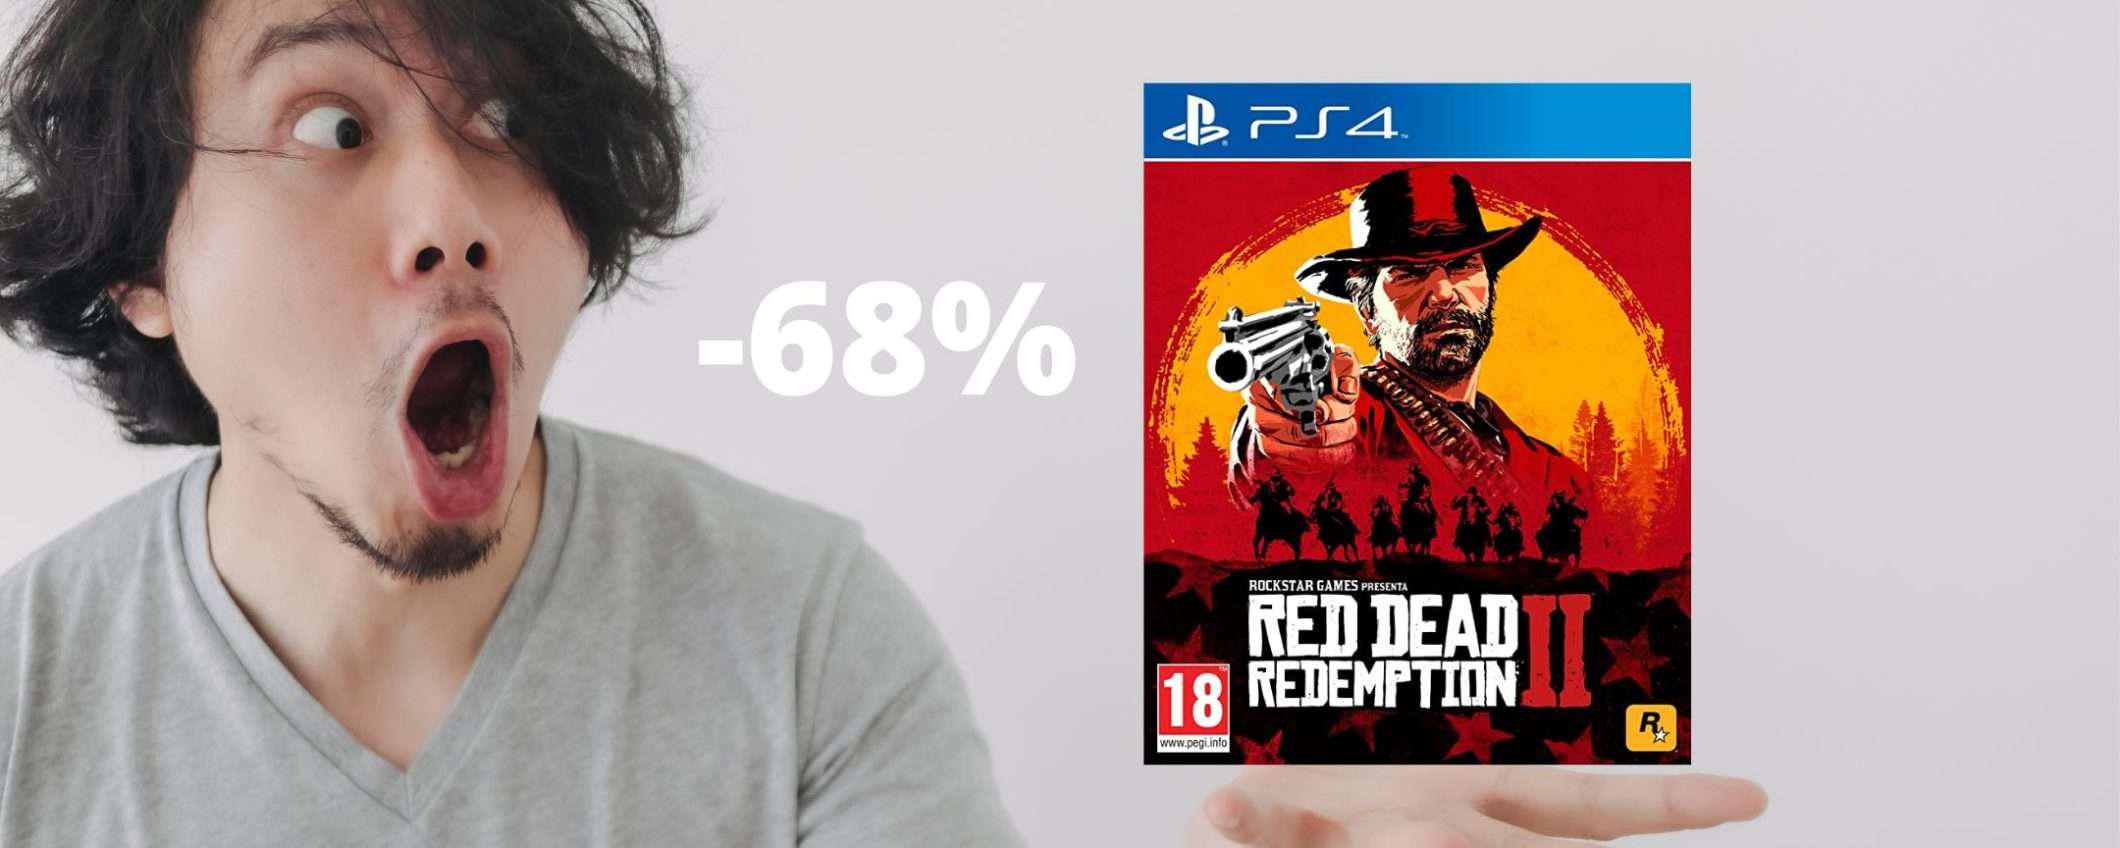 Red Dead Redemption 2: sconto FOLLE del 68%